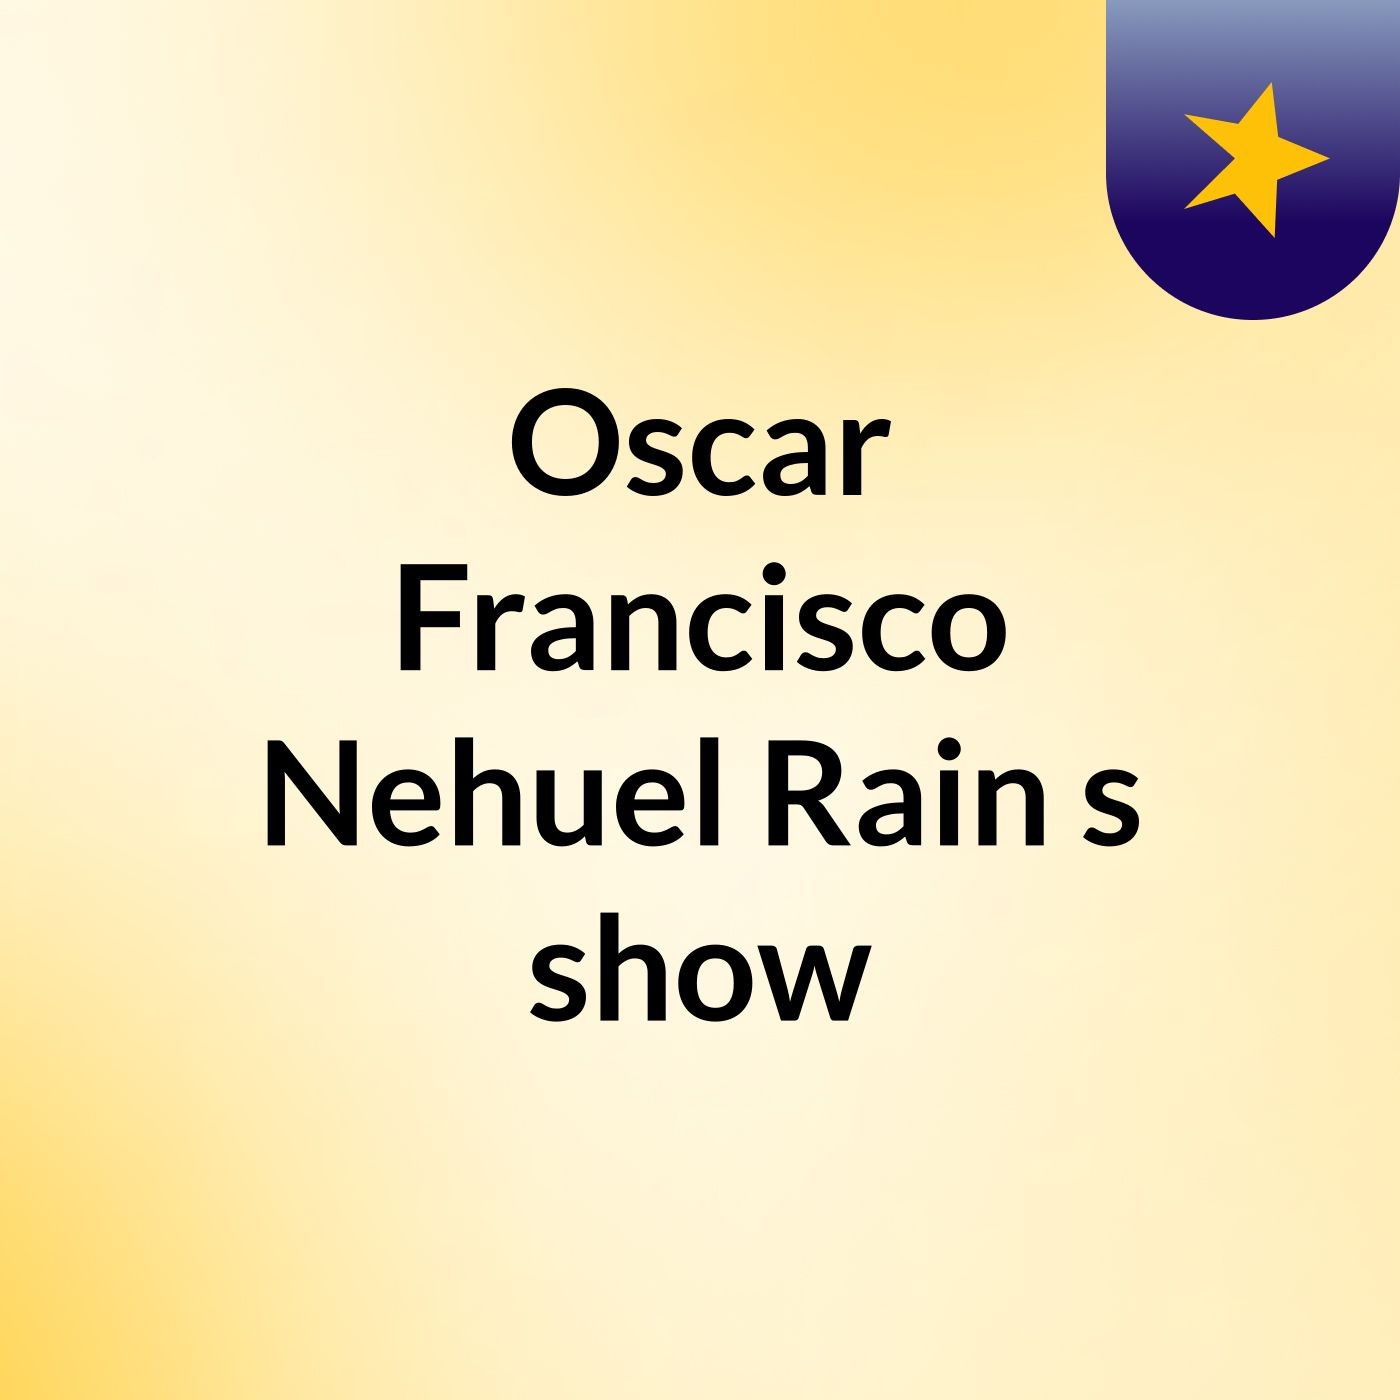 Oscar Francisco Nehuel Rain's show